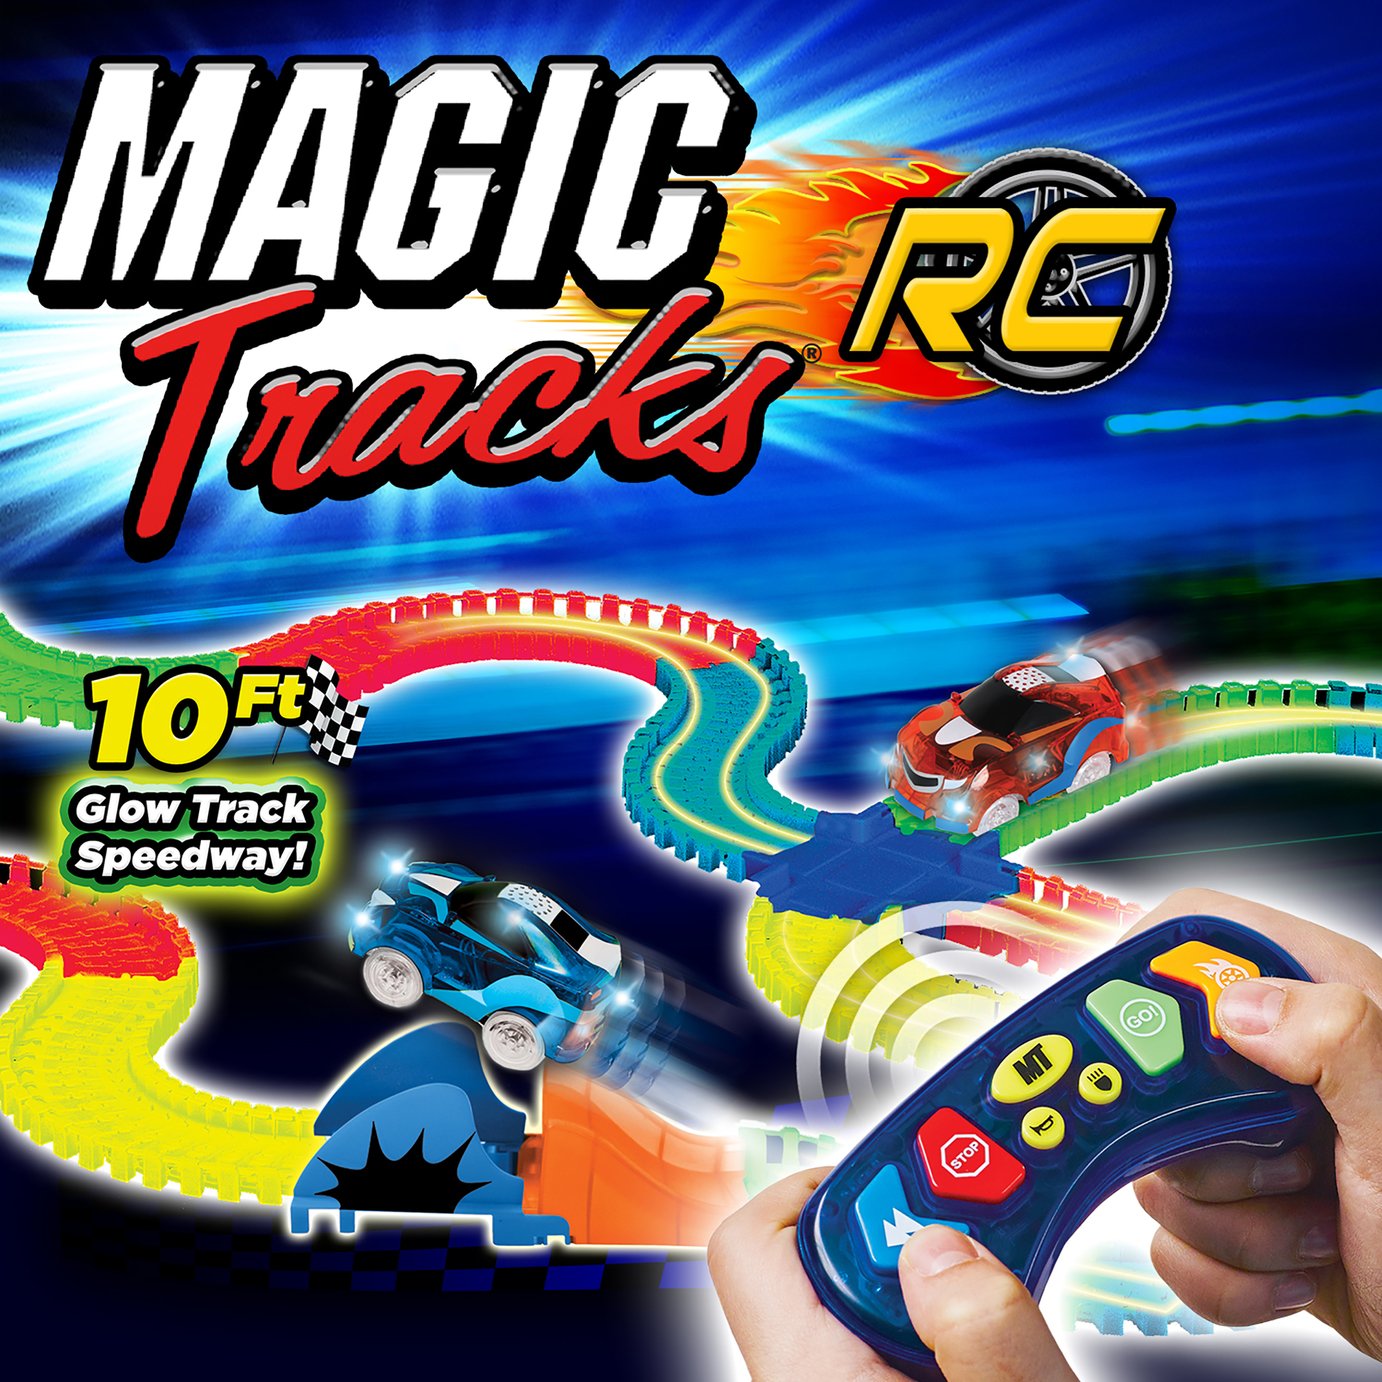 magic tracks rc not working